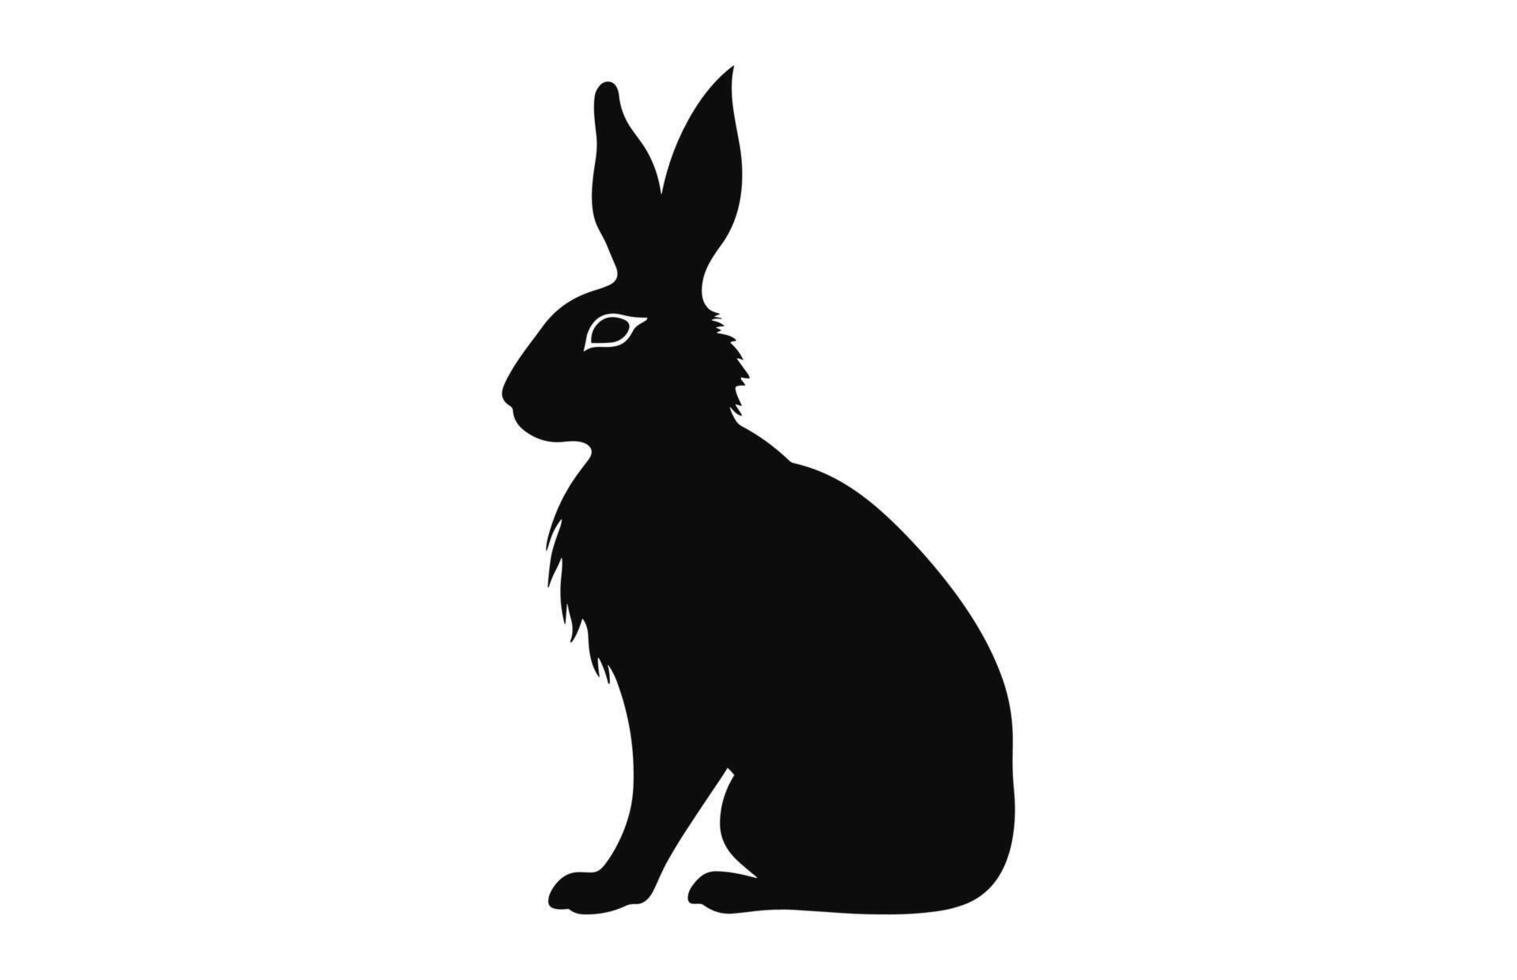 Conejo vector negro silueta aislado en un blanco antecedentes